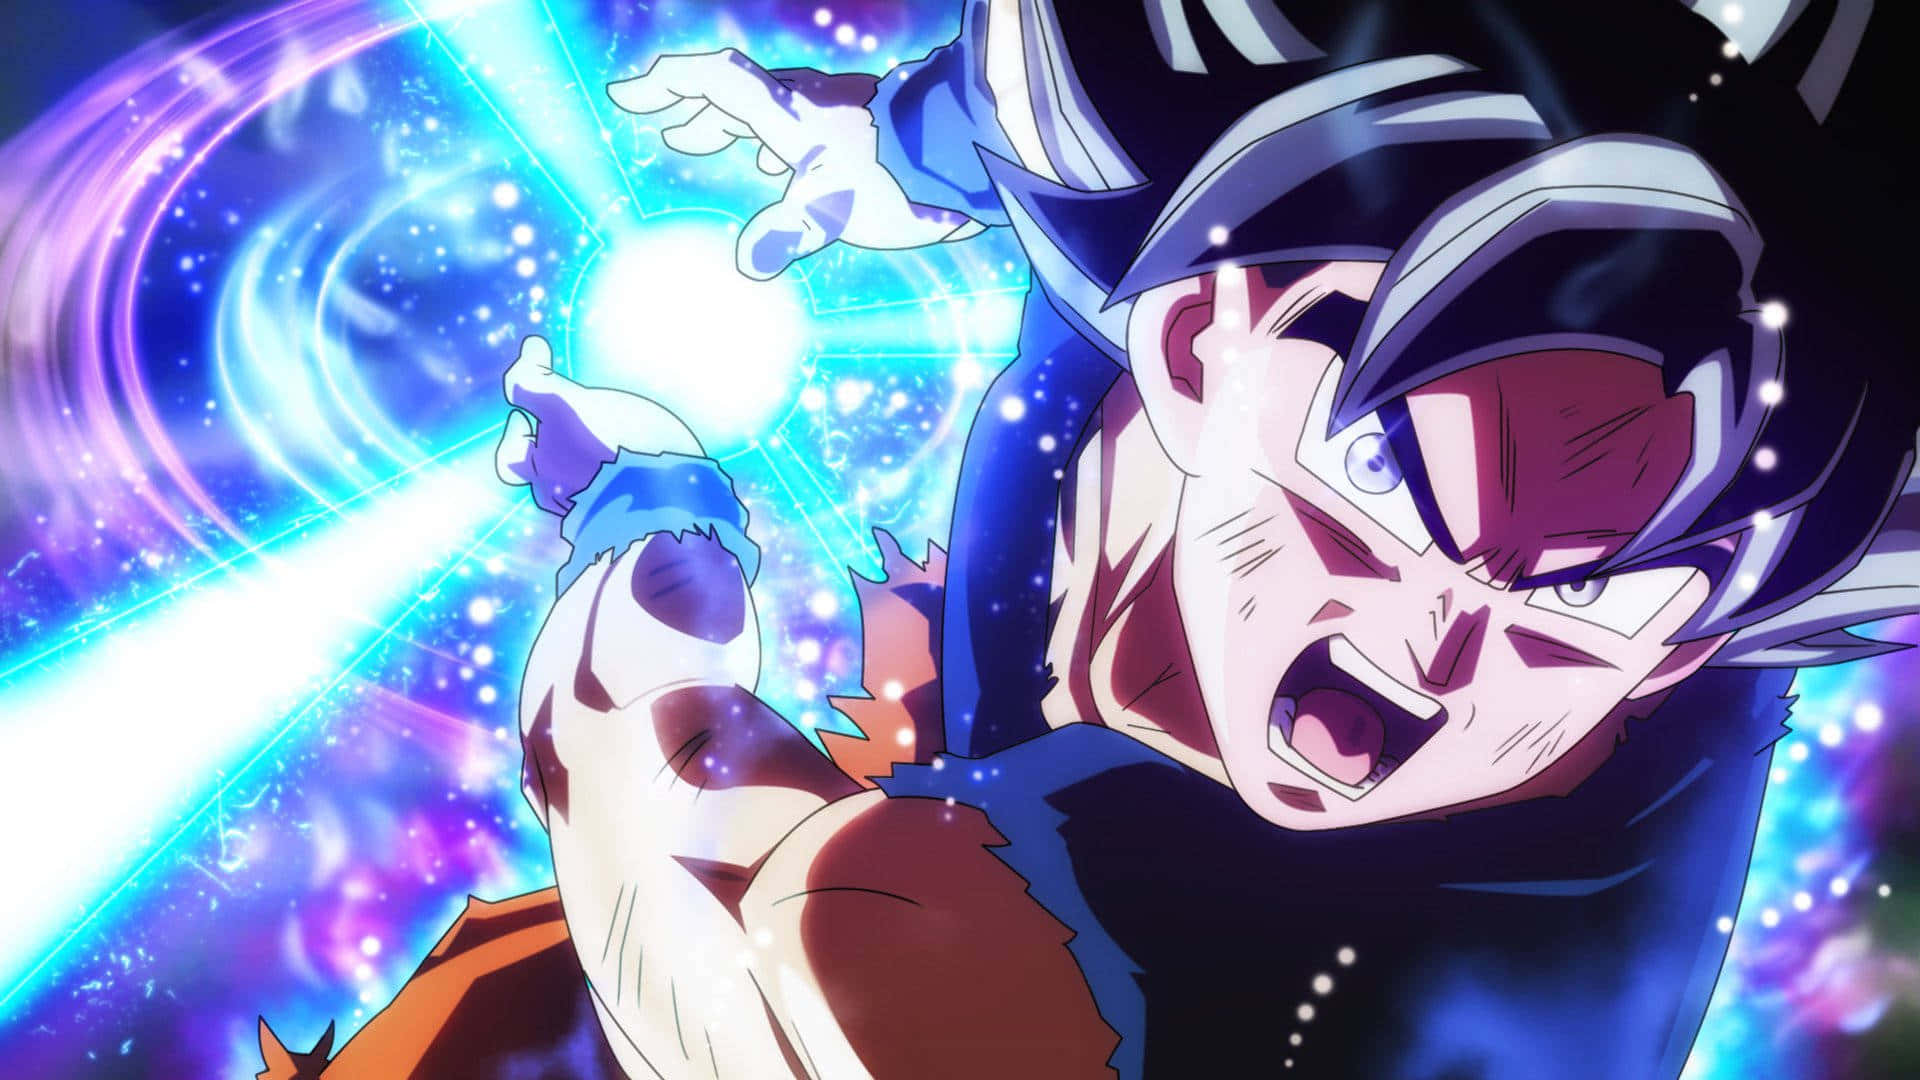 Gokuerlangt Den Ultra Instinct In Der Animierten Klassikerserie Dragon Ball. Wallpaper